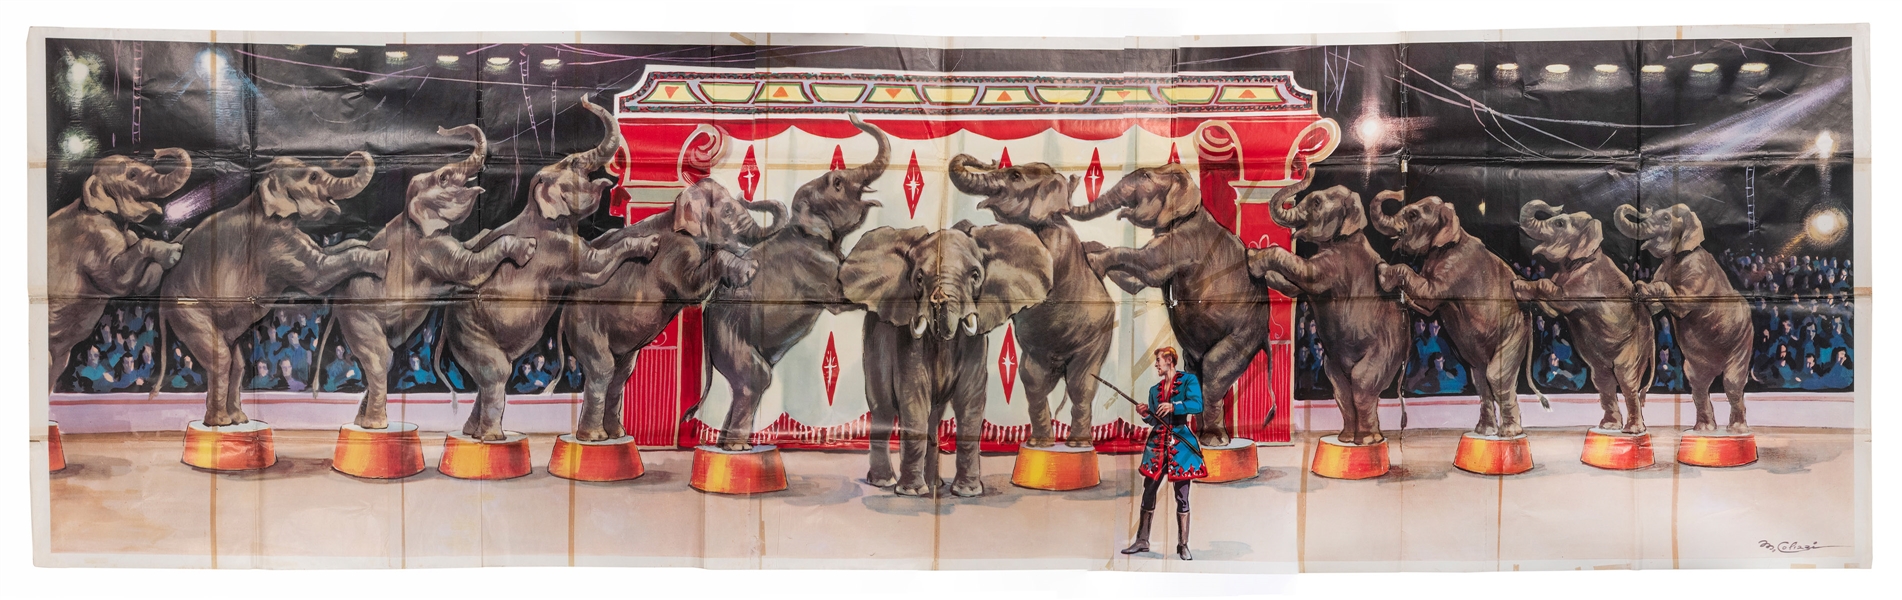  COLIZZI, M. Elephant Act Circus Billboard Poster. Multi-she...